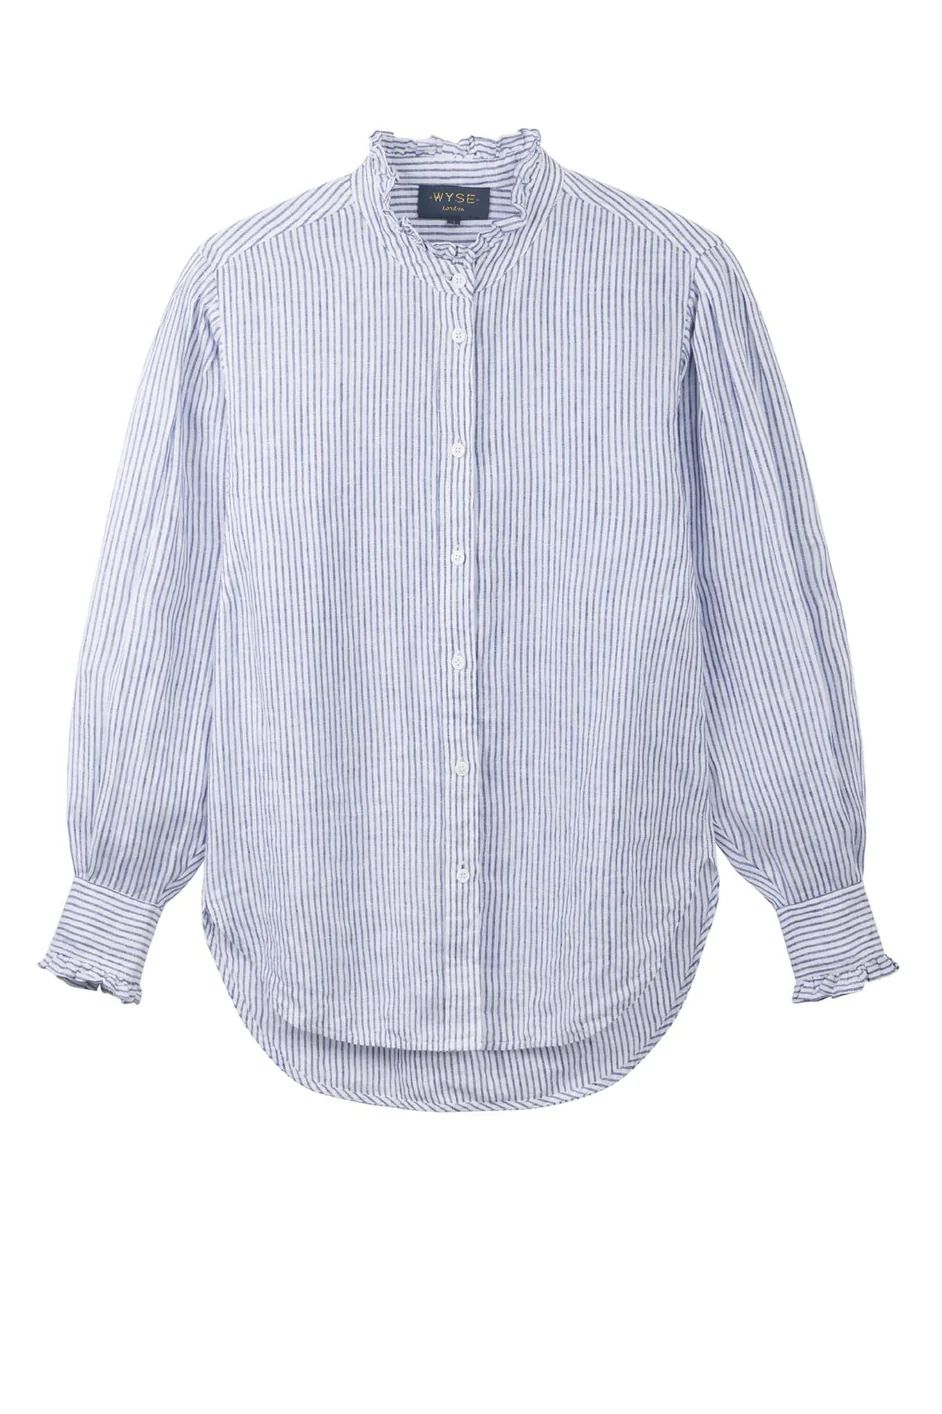 Paris Linen Stripe Frill Shirt - White/Blue | WYSE London